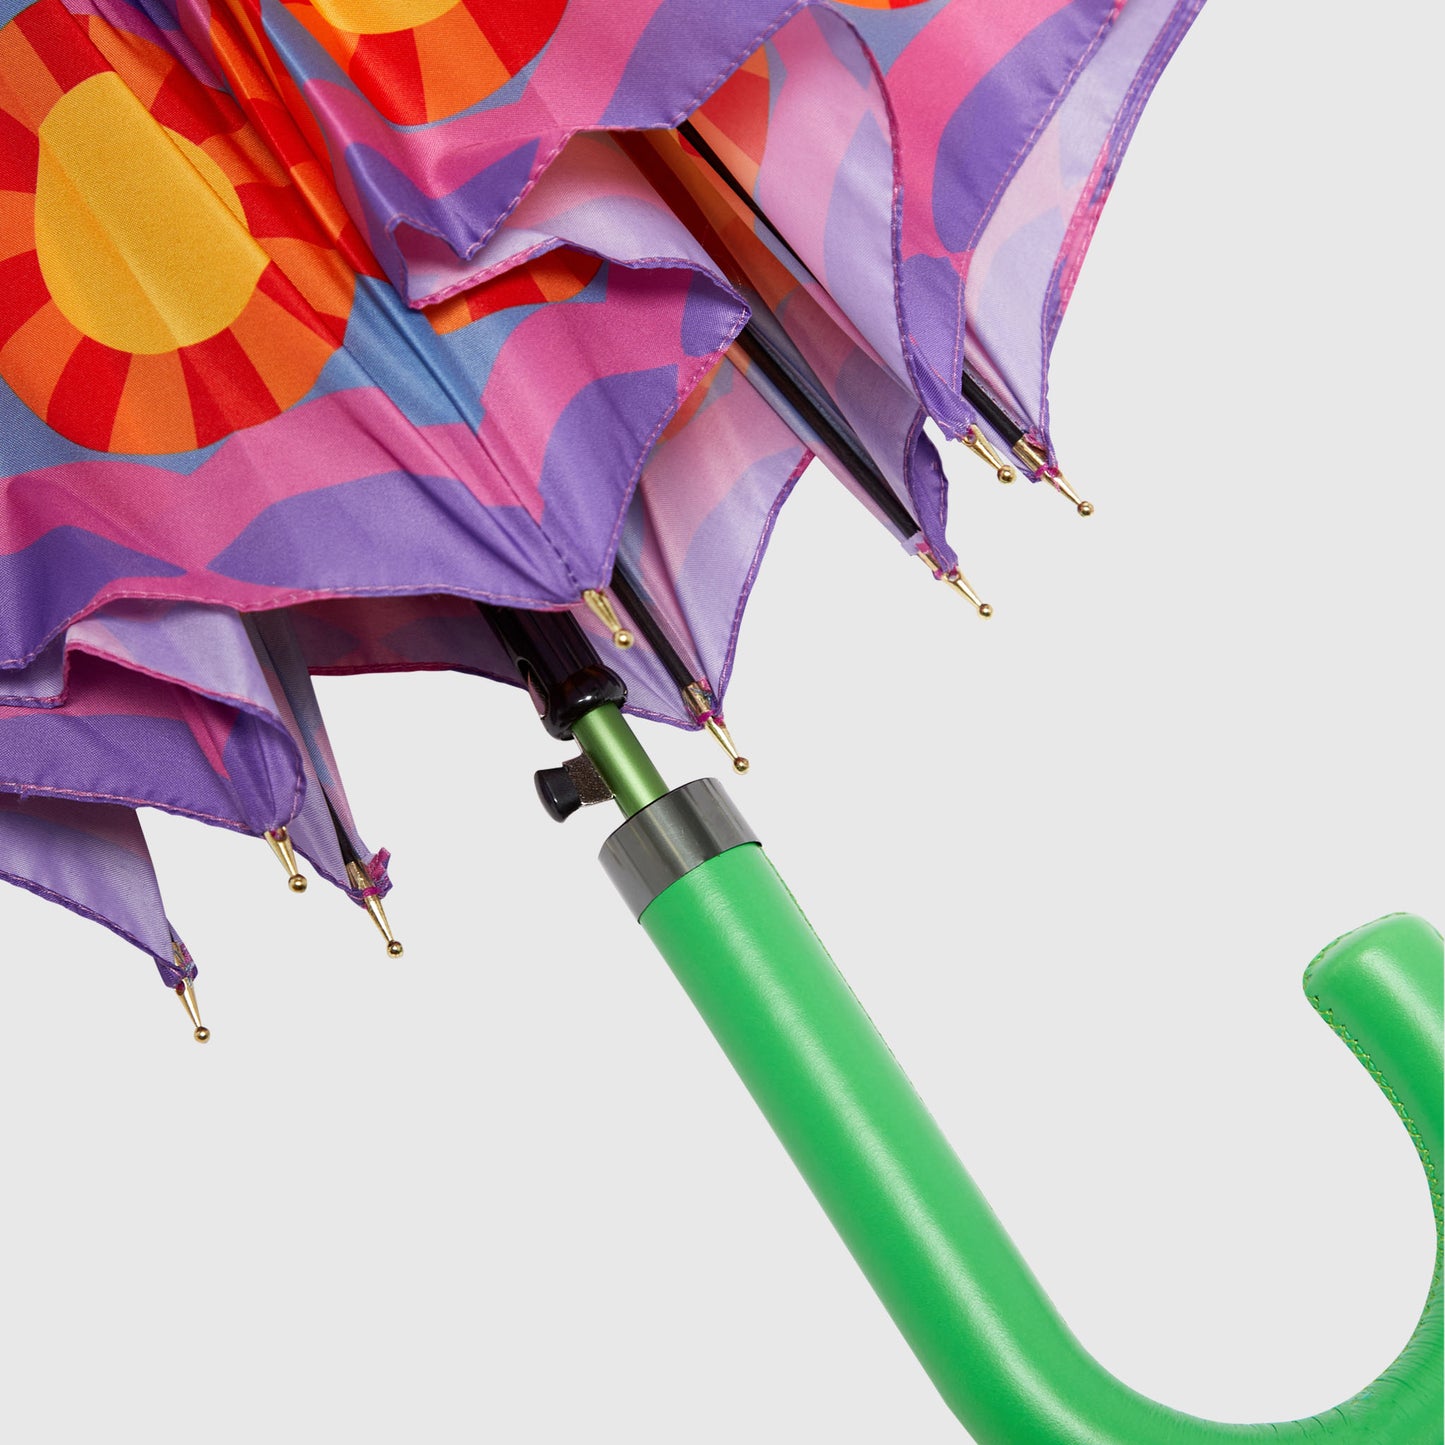 ORUN Umbrella